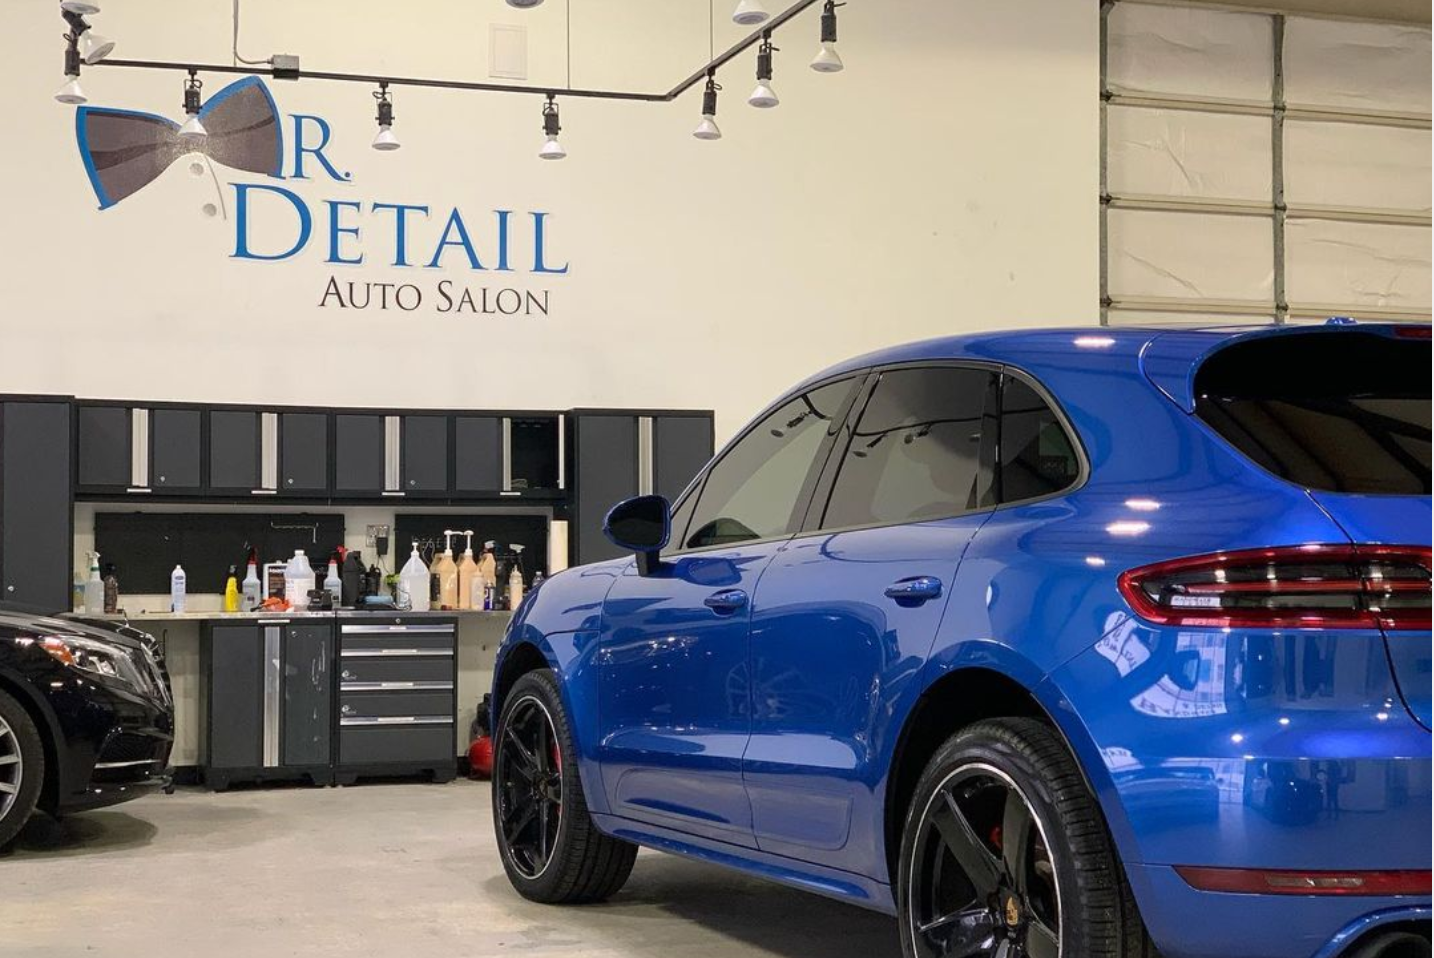 Mr. Detail Auto Salon Showroom